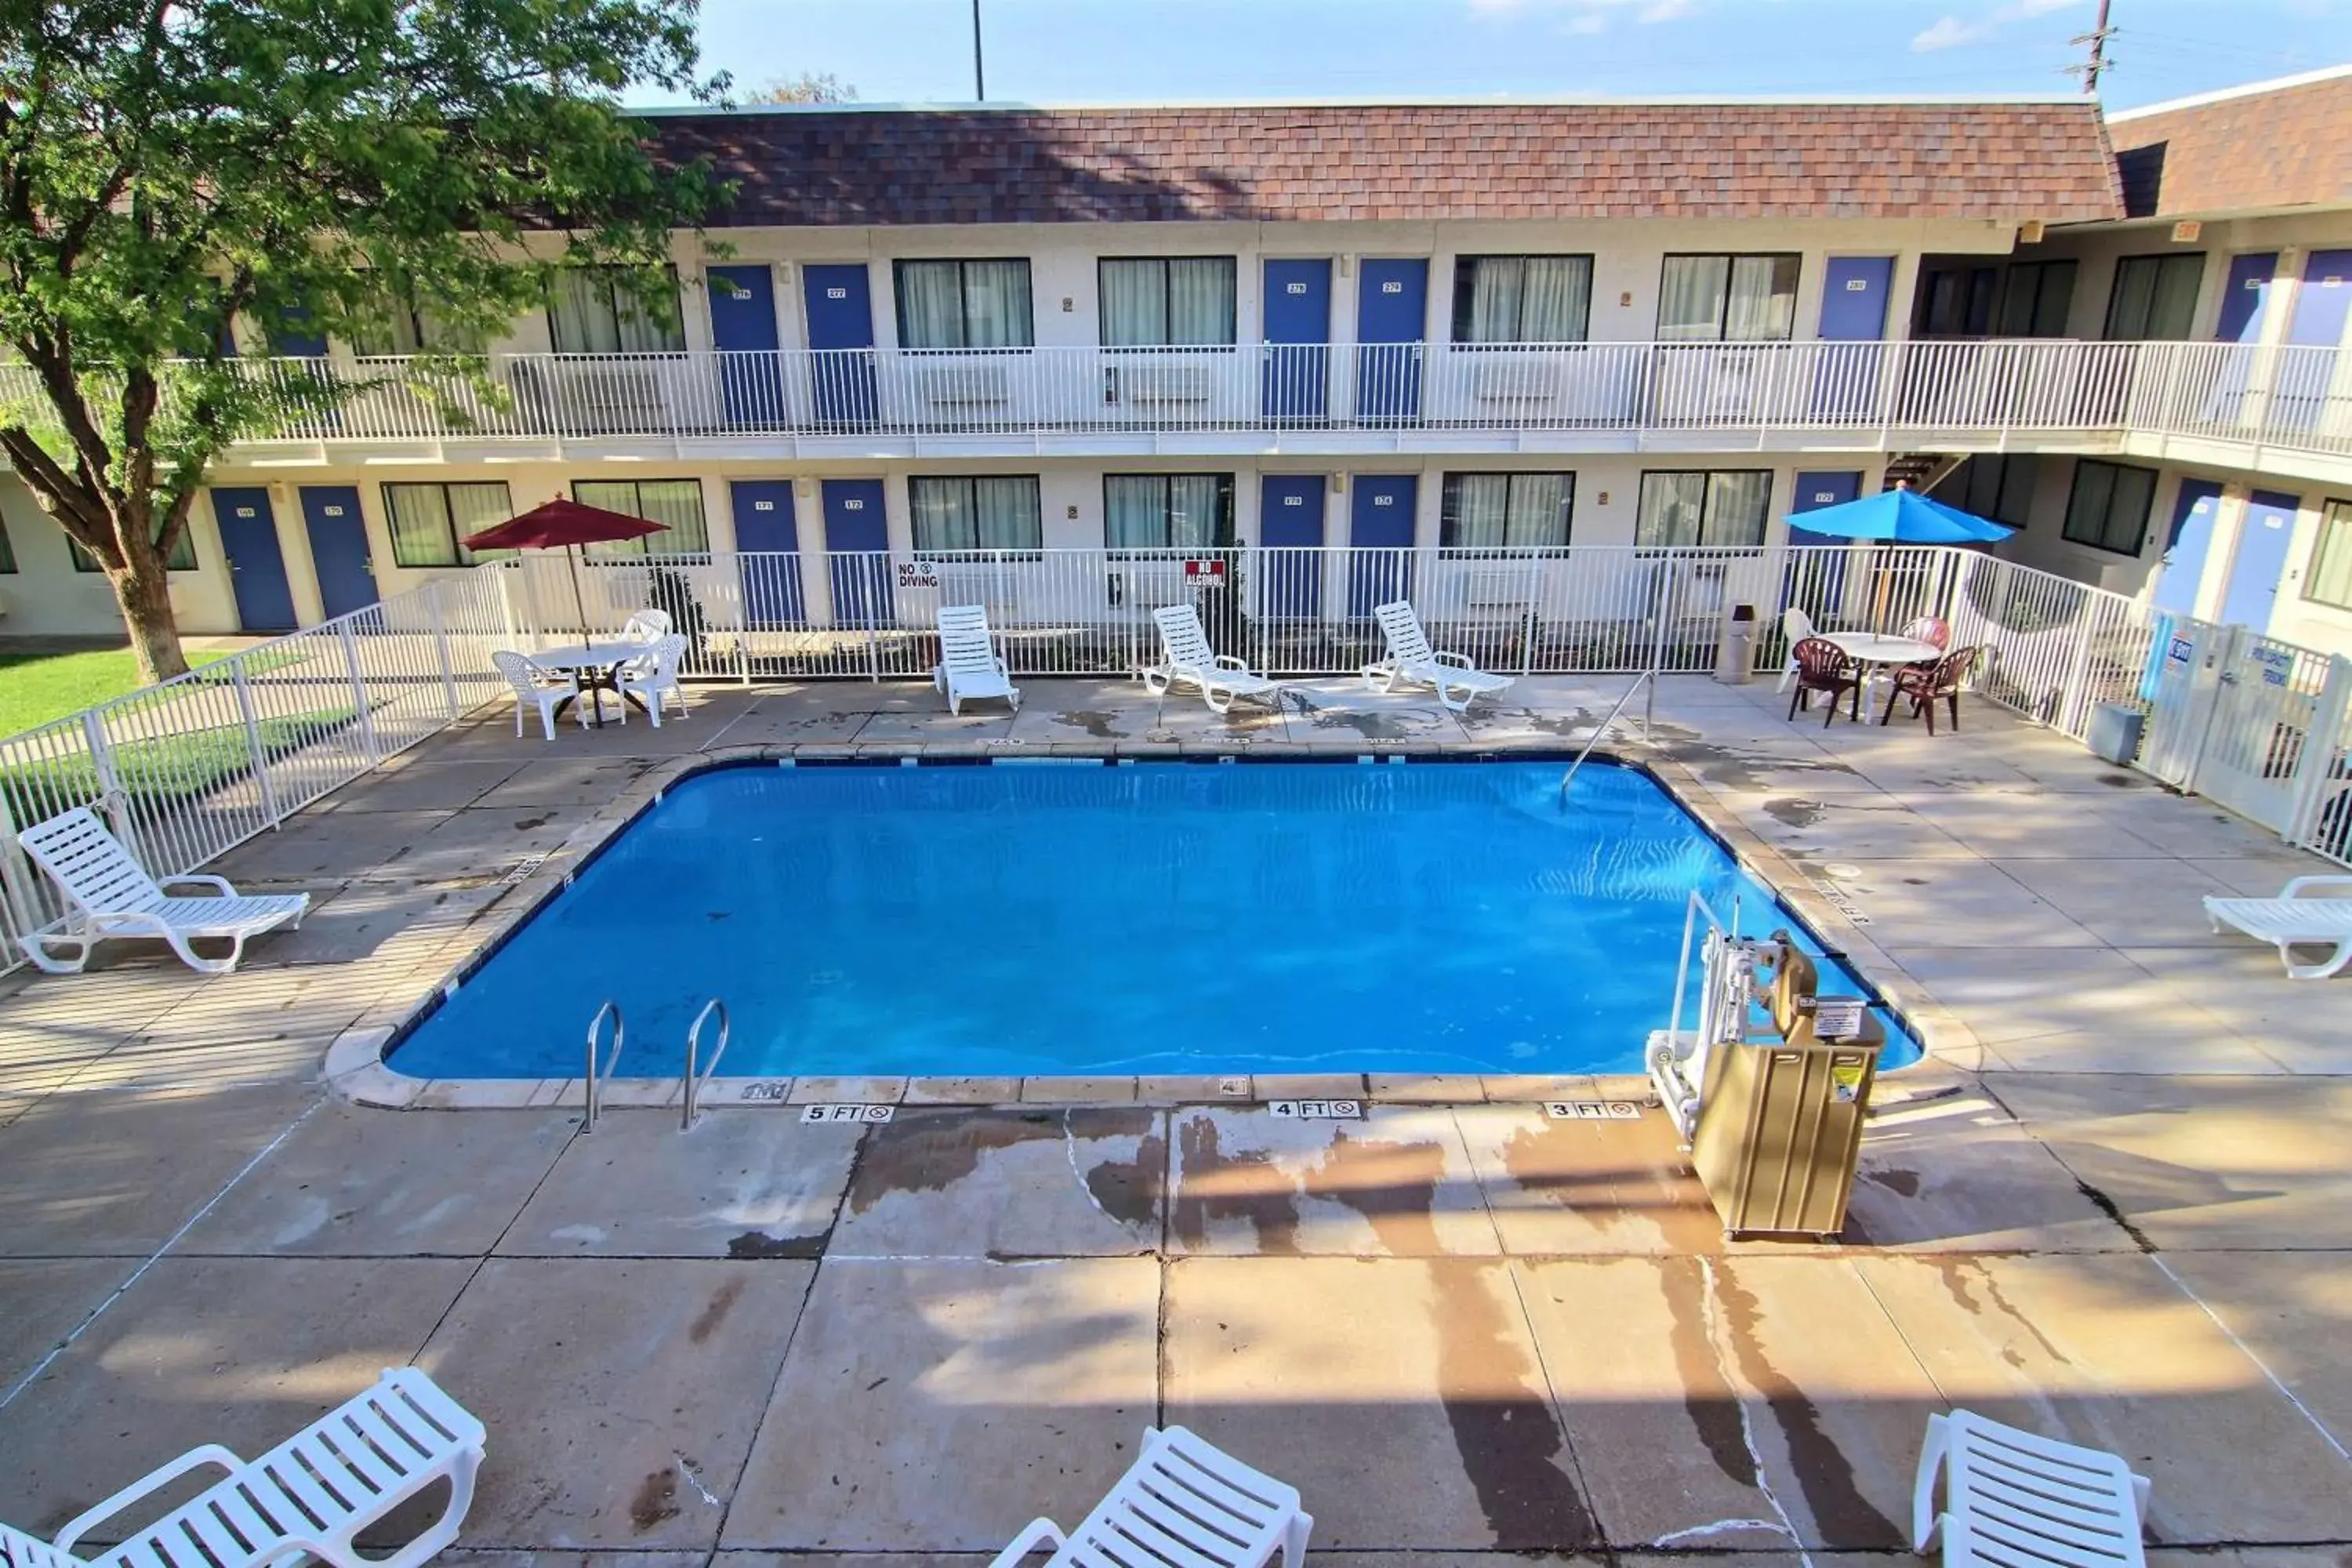 On site, Pool View in Motel 6-Lubbock, TX